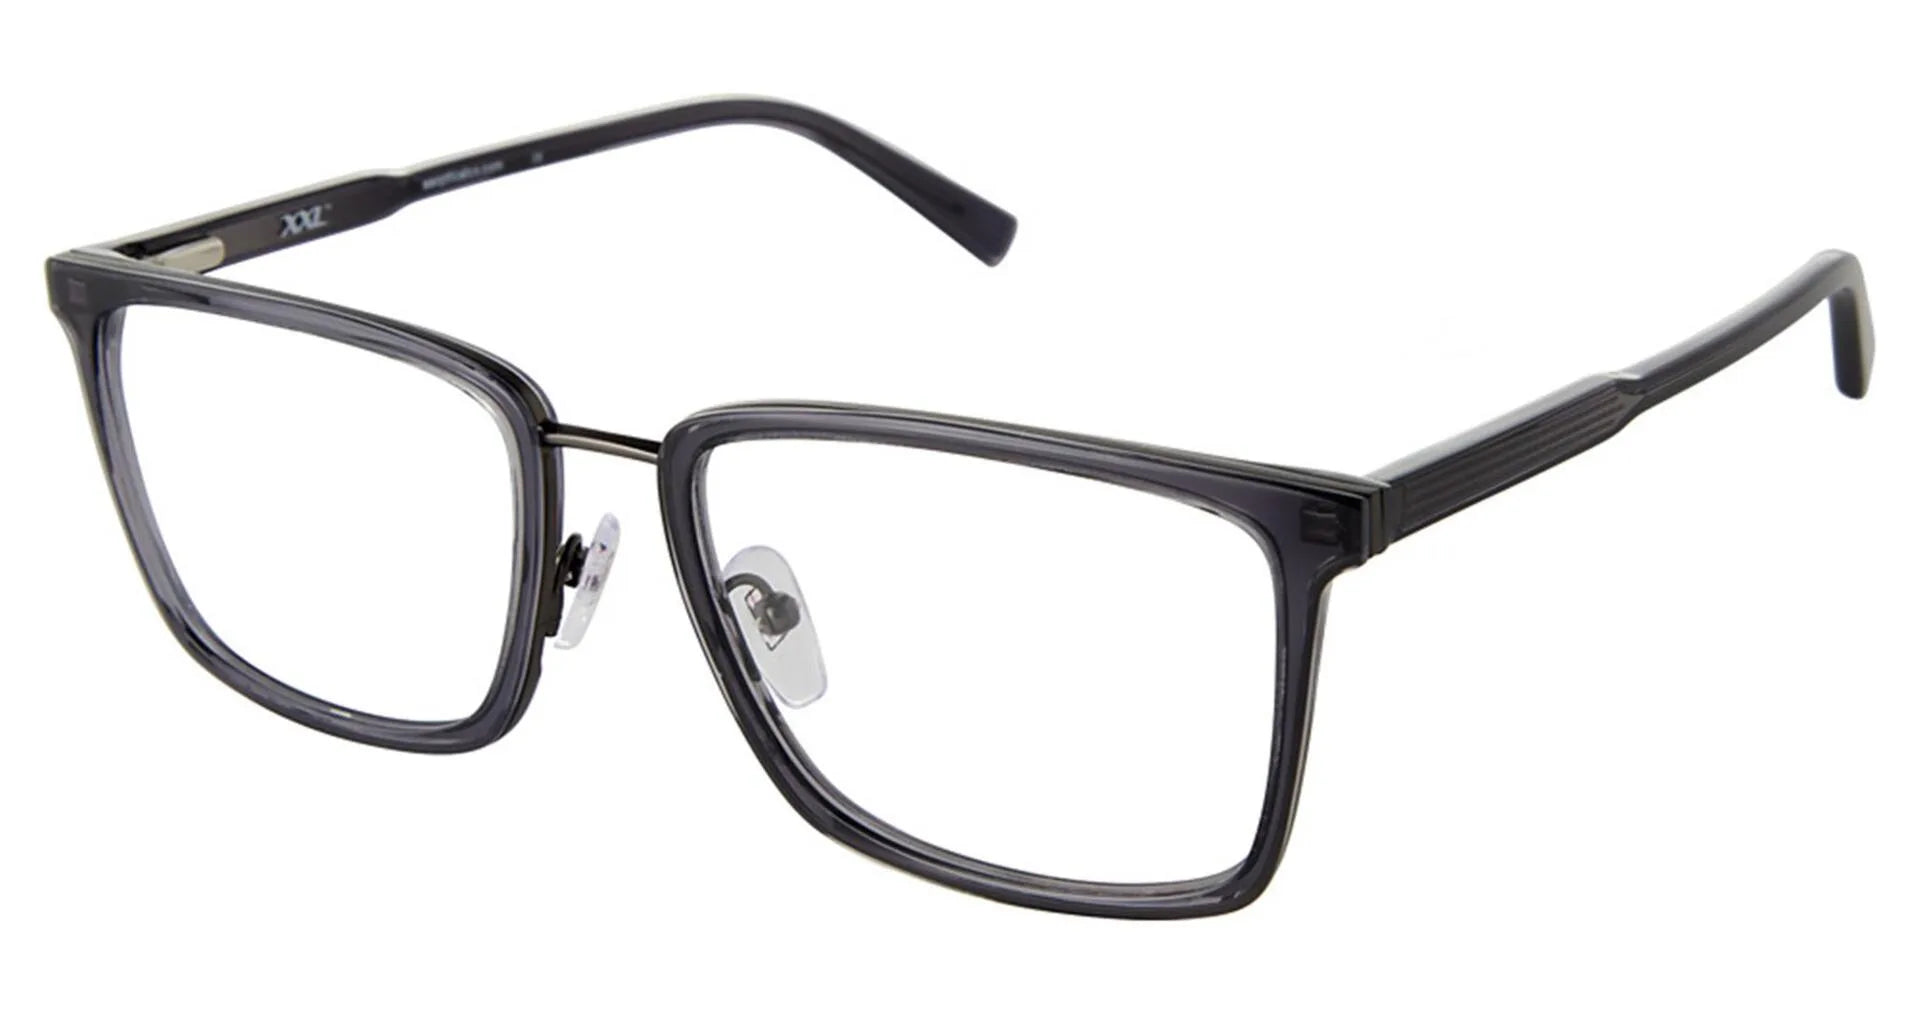 XXL Eyewear Palomino Eyeglasses Grey